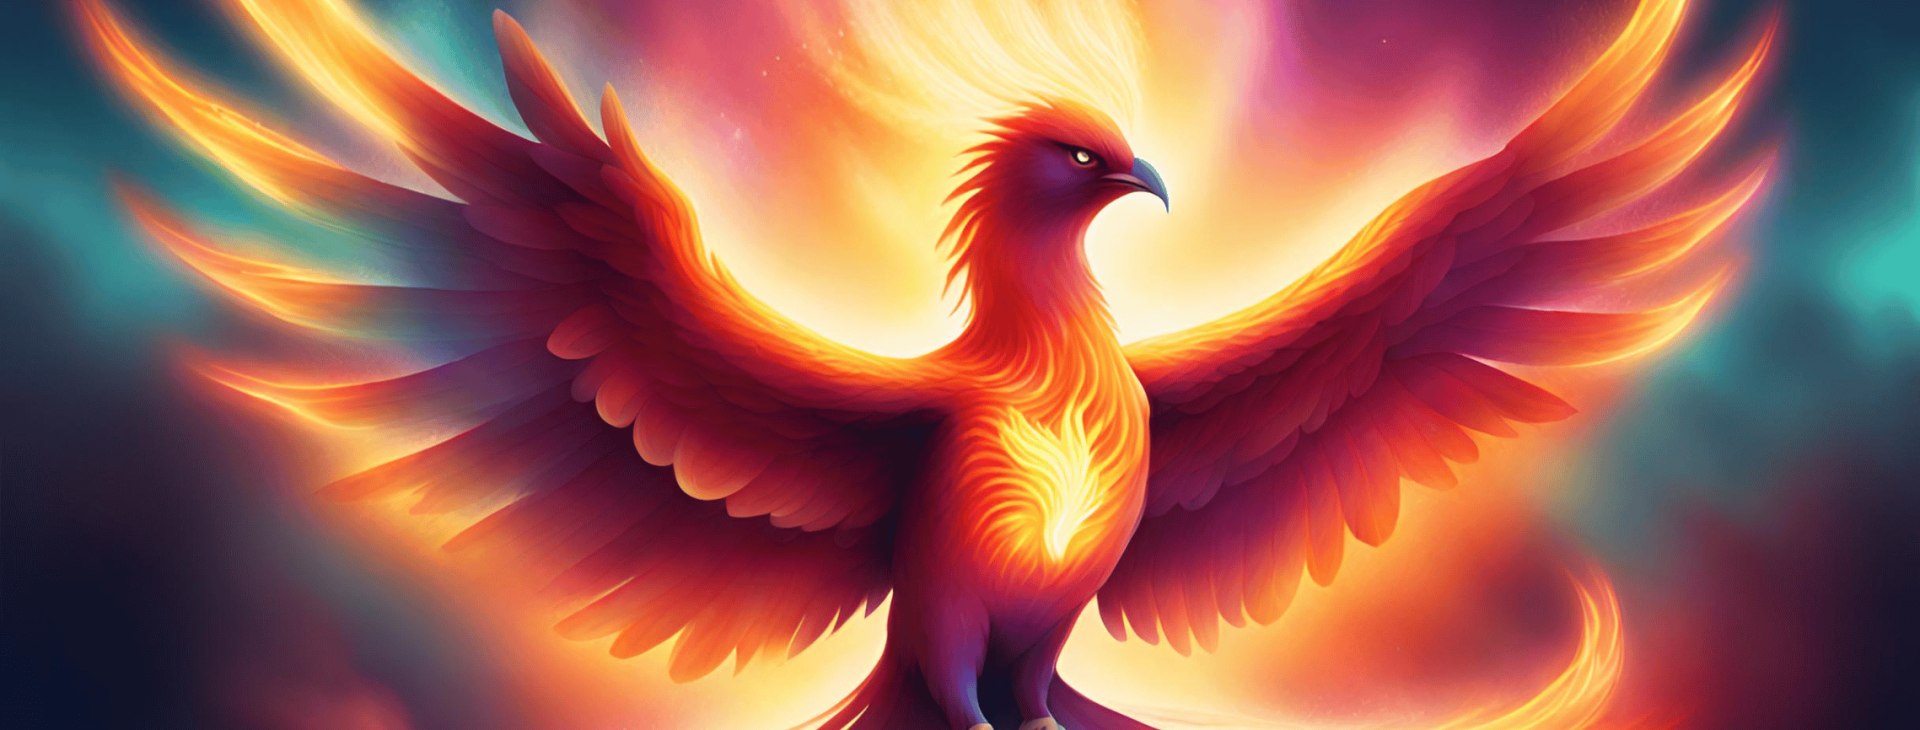 Bandeau soin phoenix